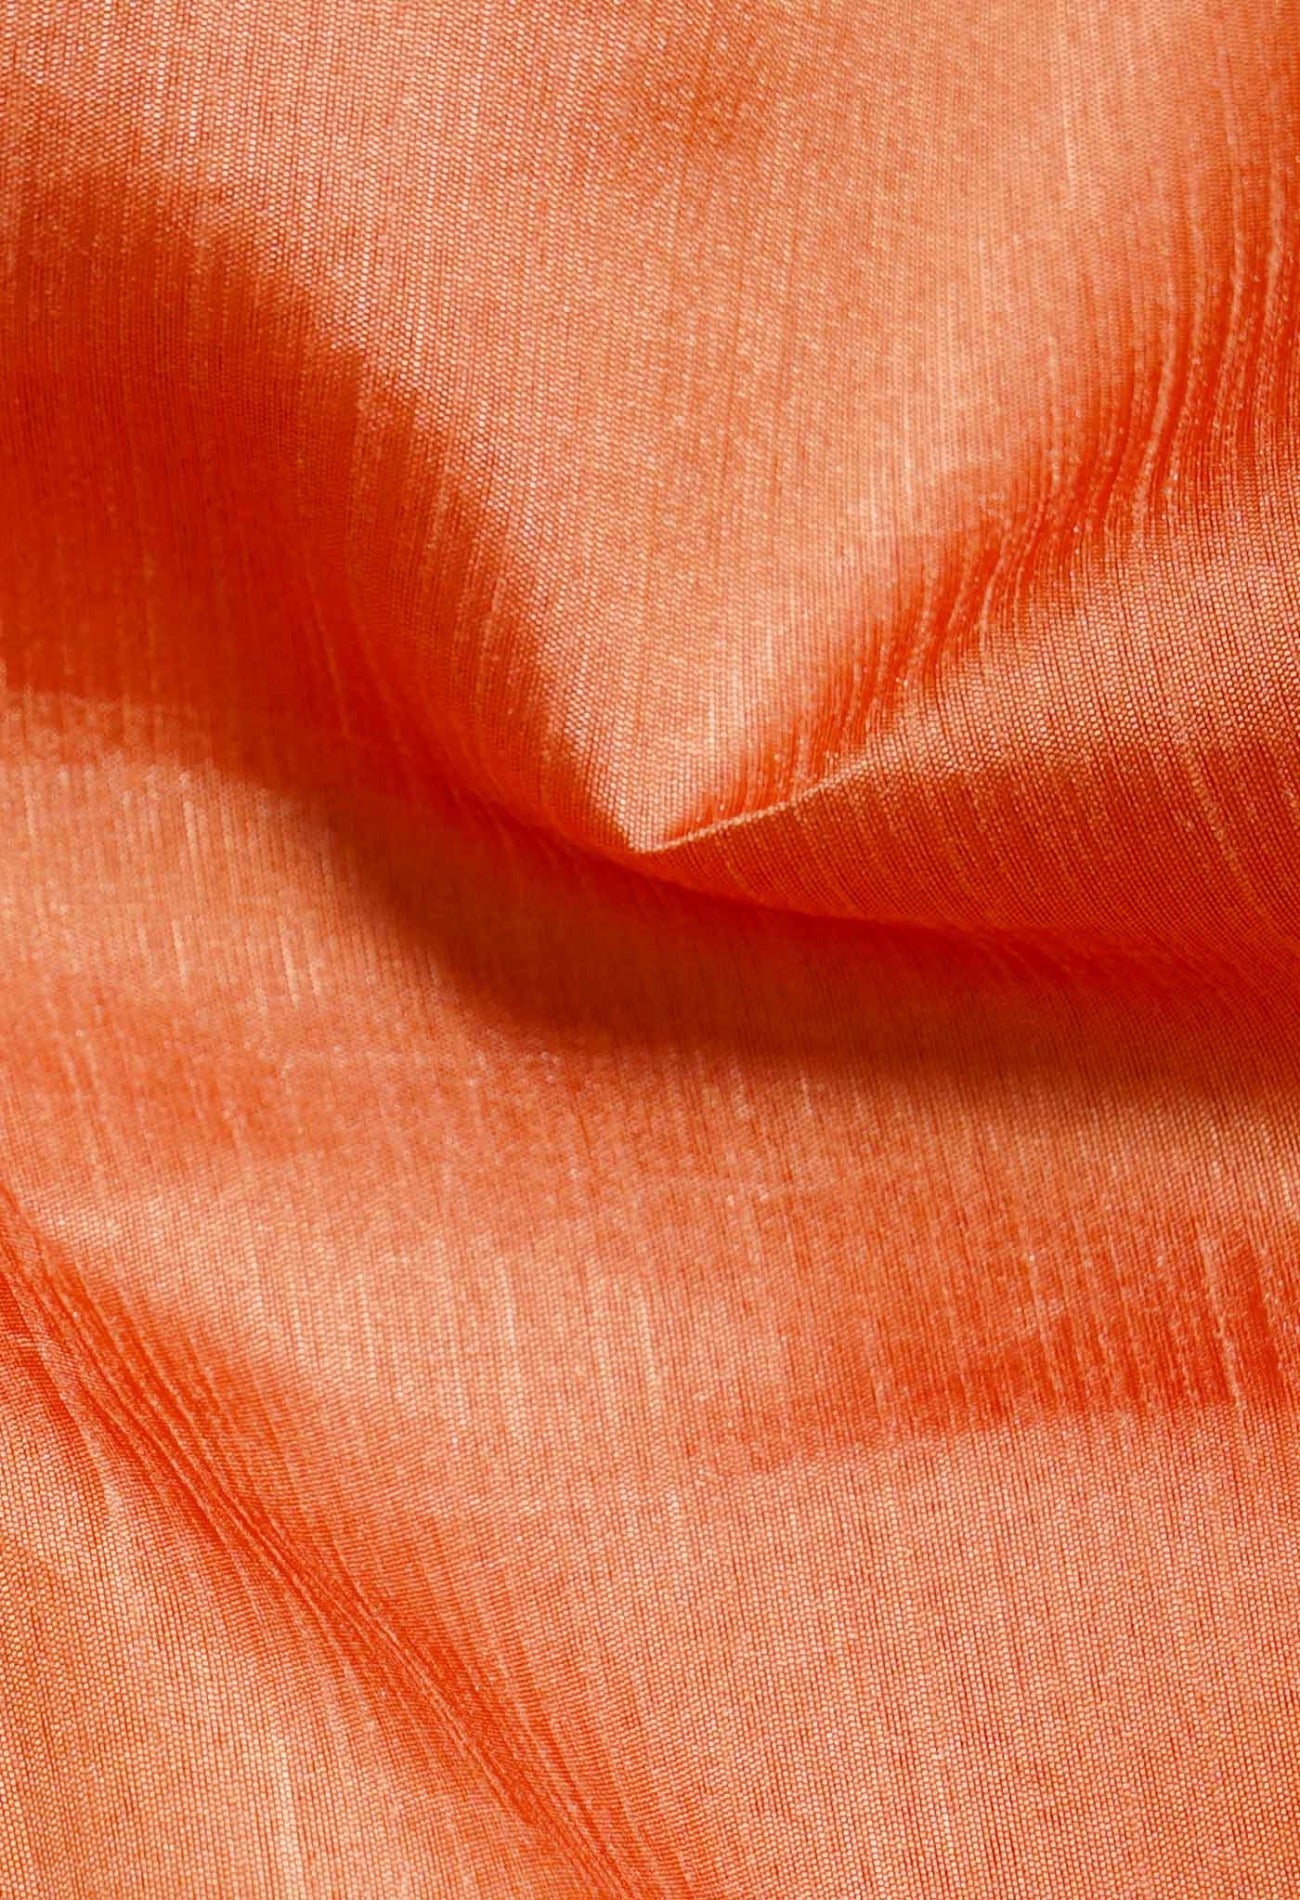 Online Shopping for Peach Orange  Mysore Sico Saree with Fancy/Ethnic Prints from Karnataka at Unnatisilks.com India
